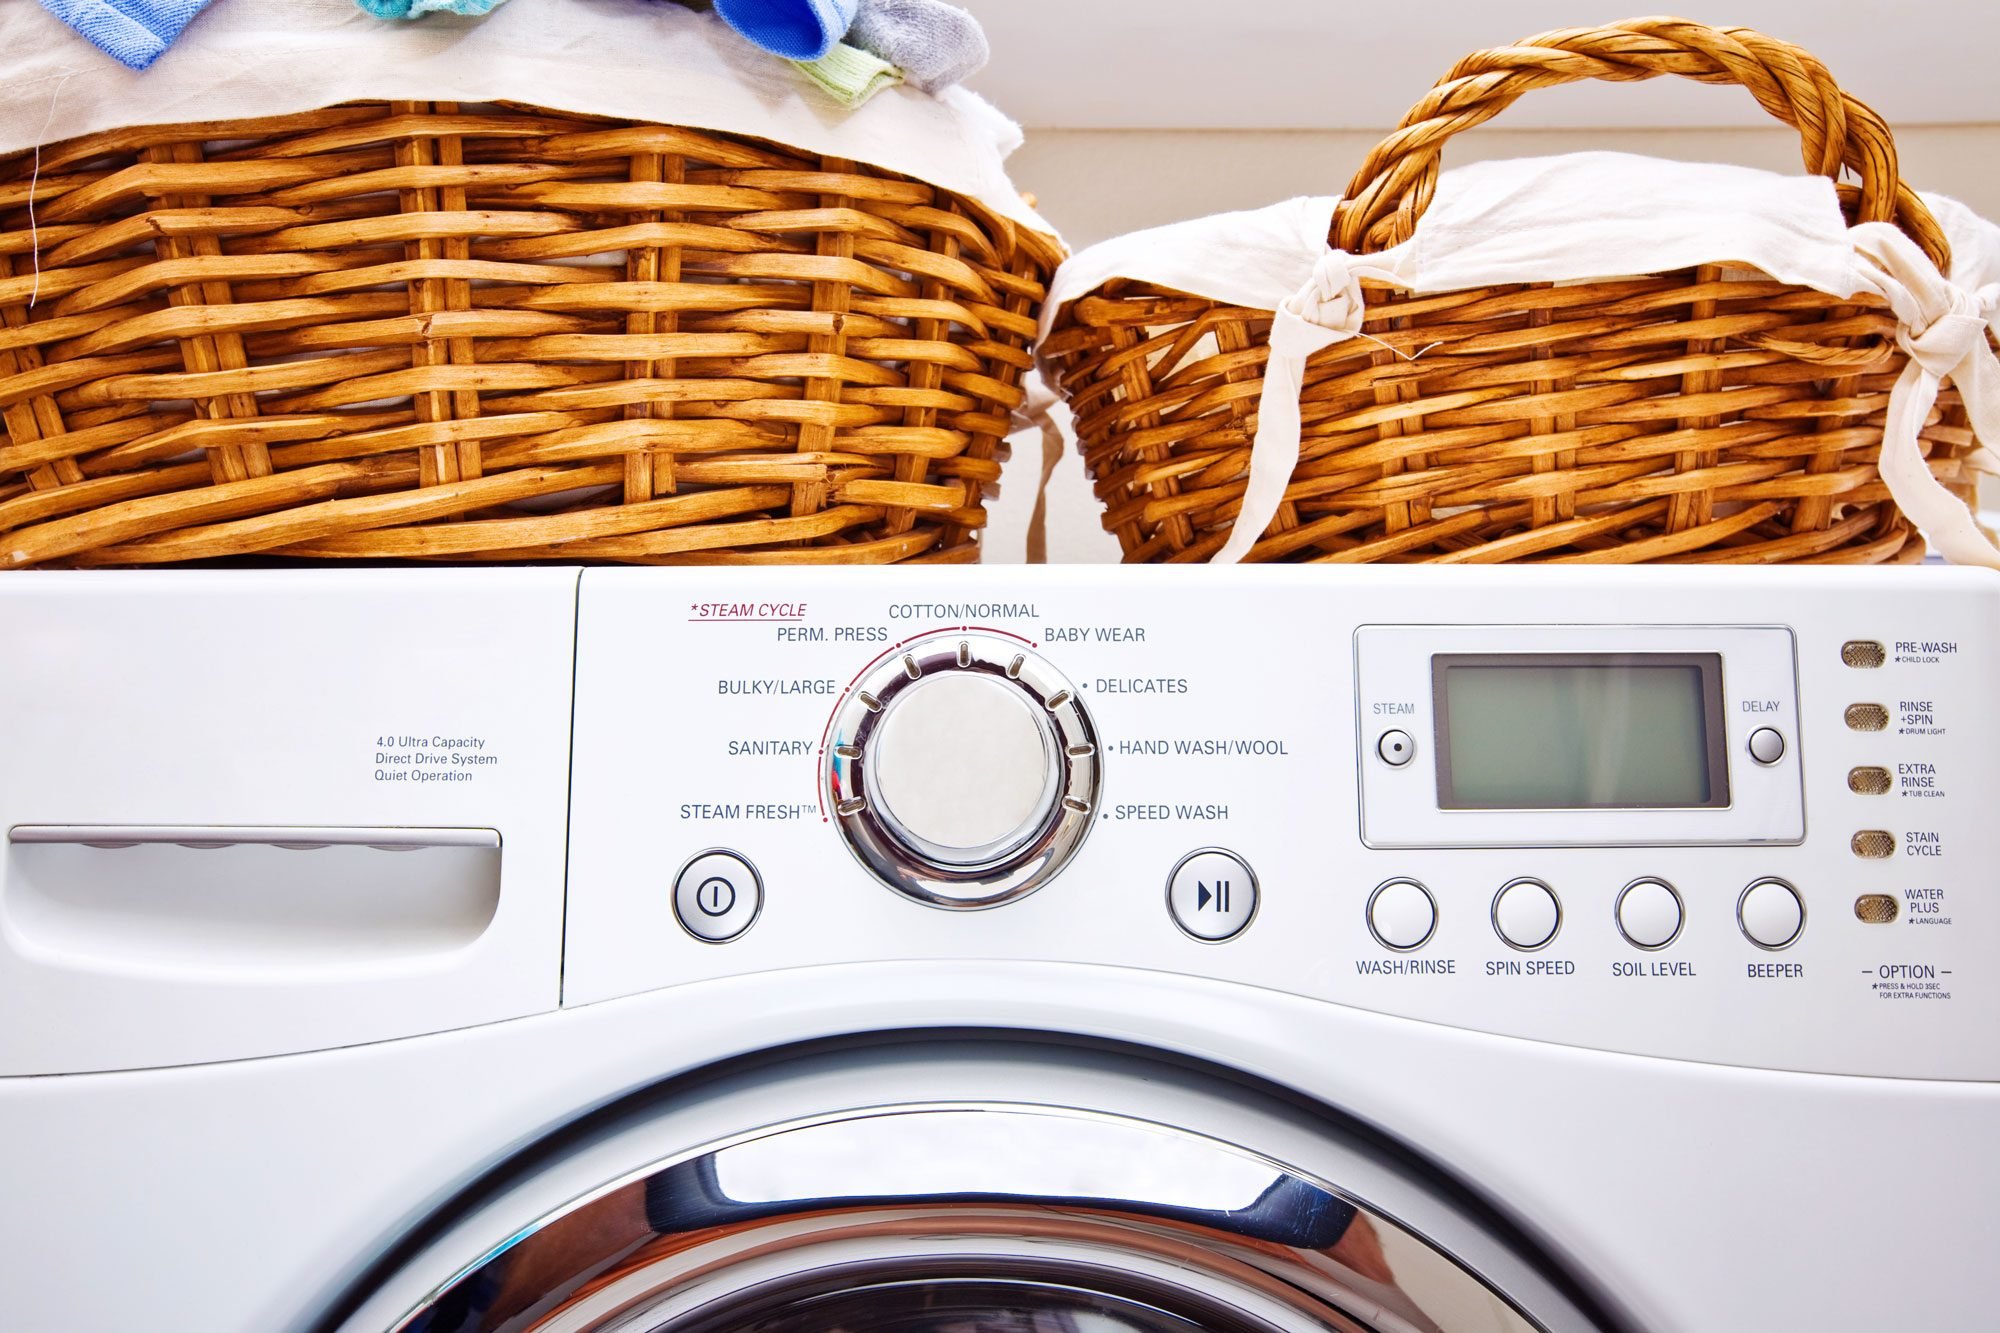 Ball Bubble Bra lingerie Saver Washer Laundry Wash Washing Machine Protector